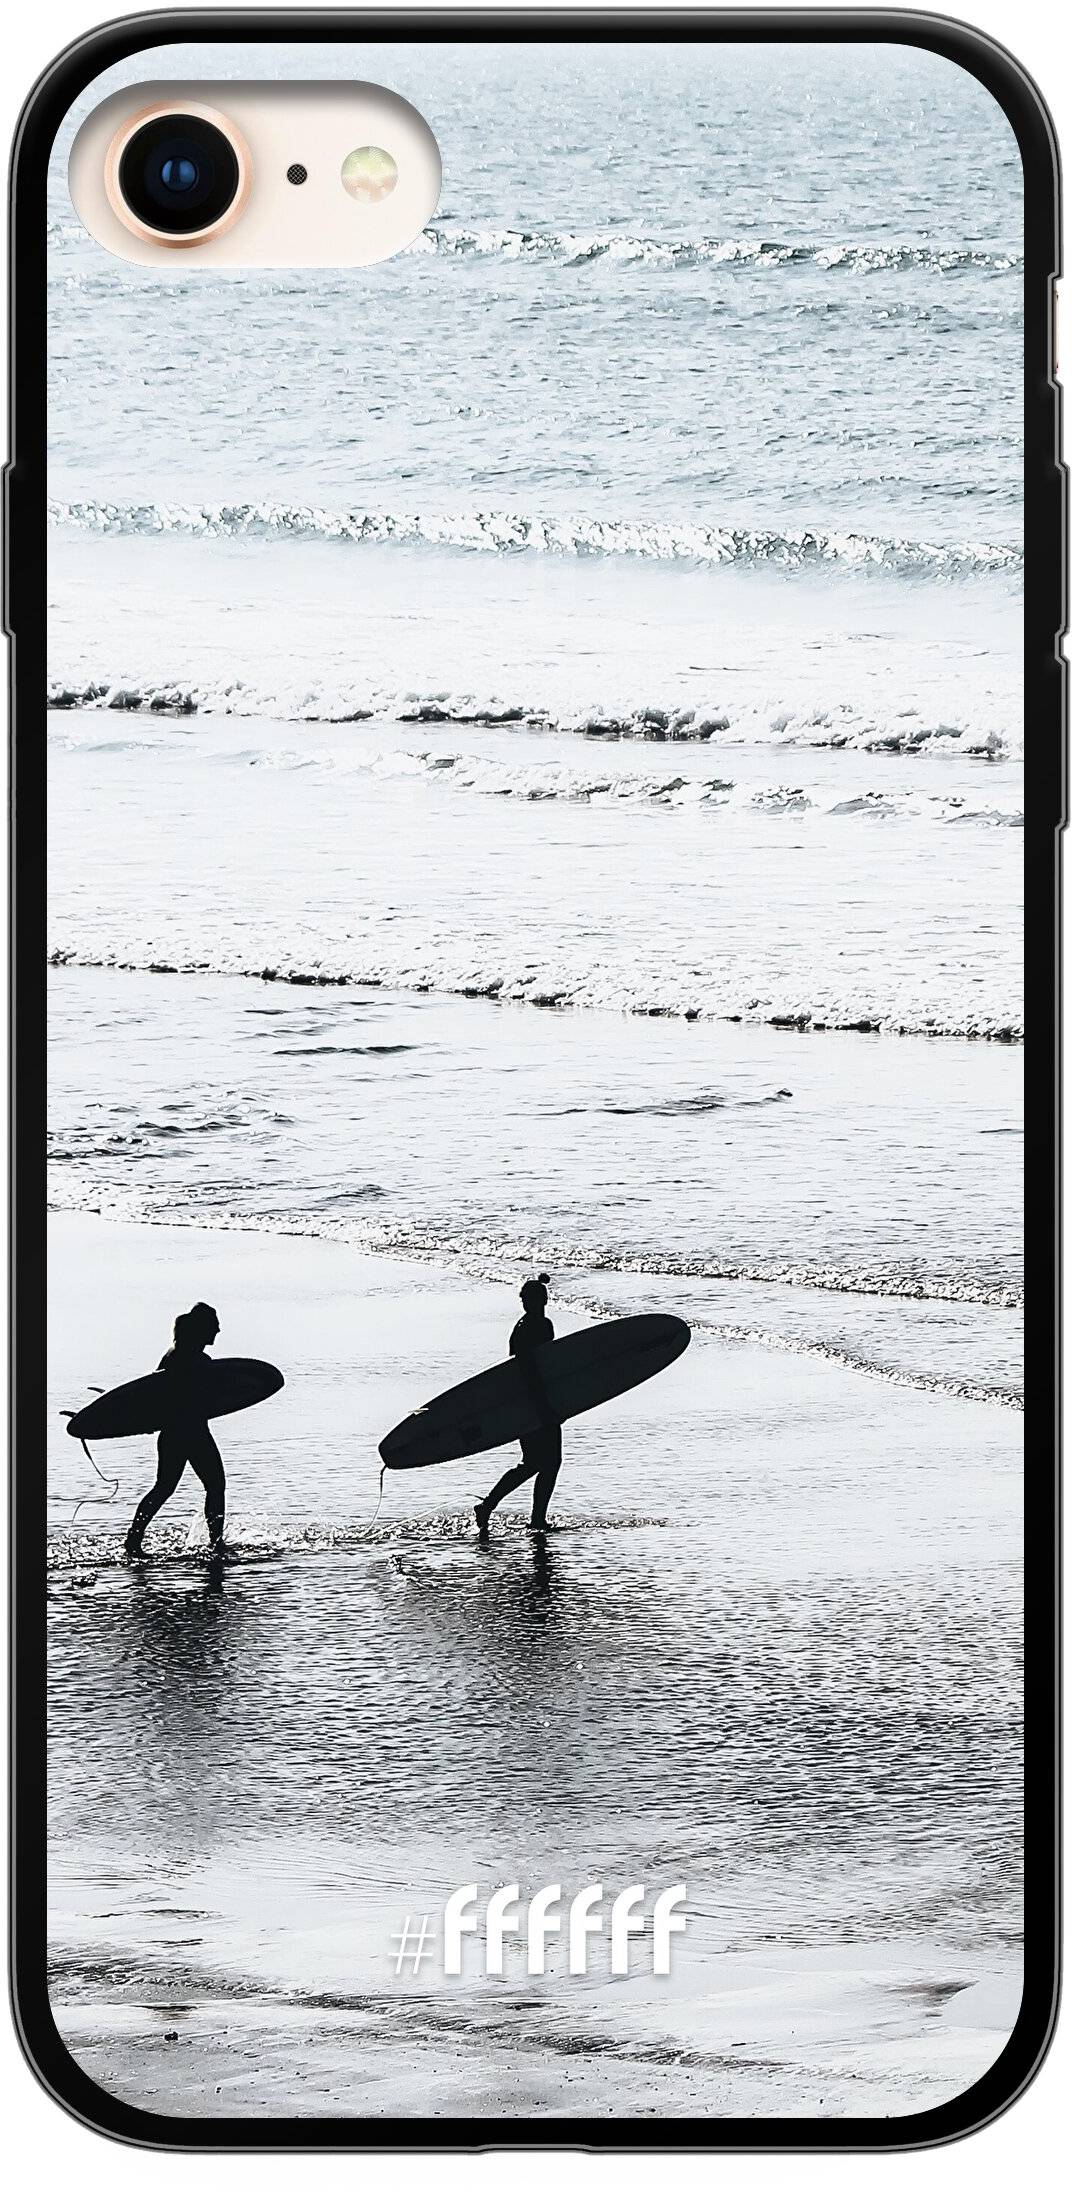 Surfing iPhone 7